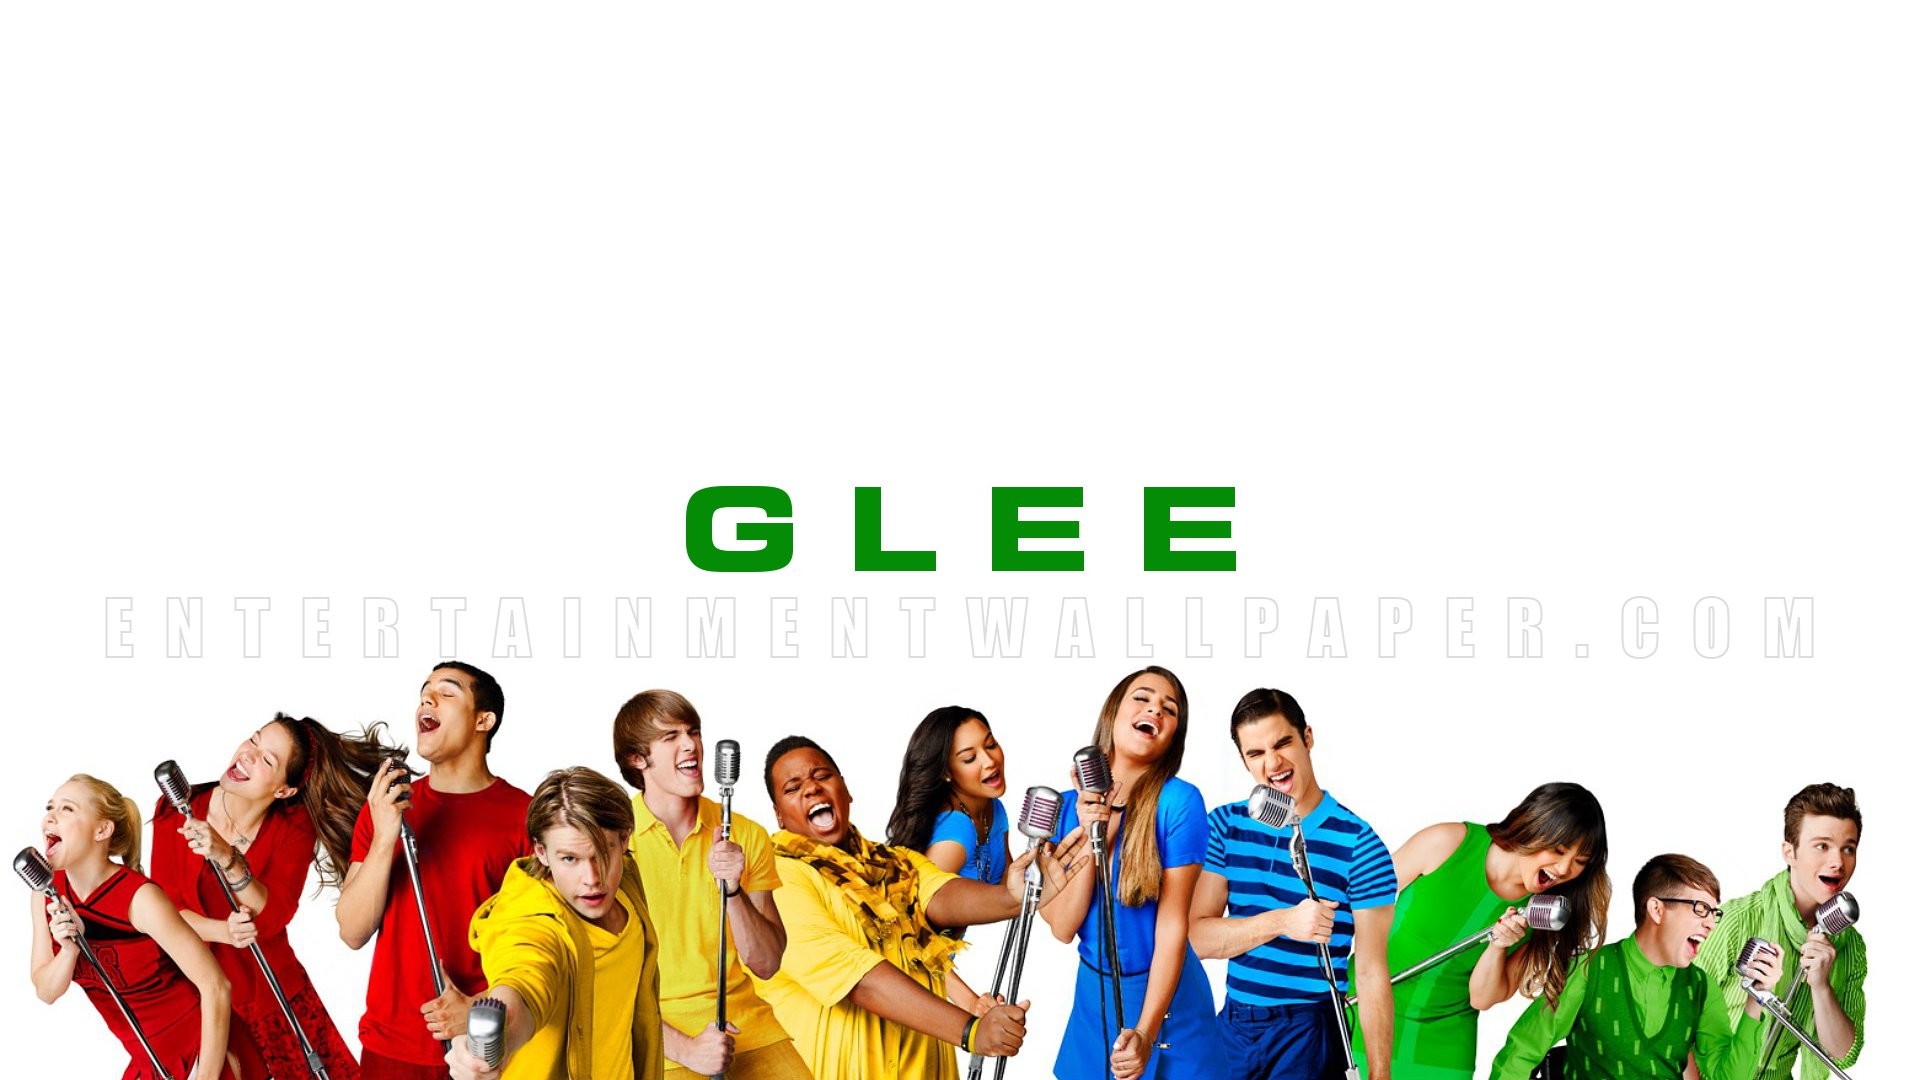 1920x1080 Glee Wallpaper - Original size, download now.